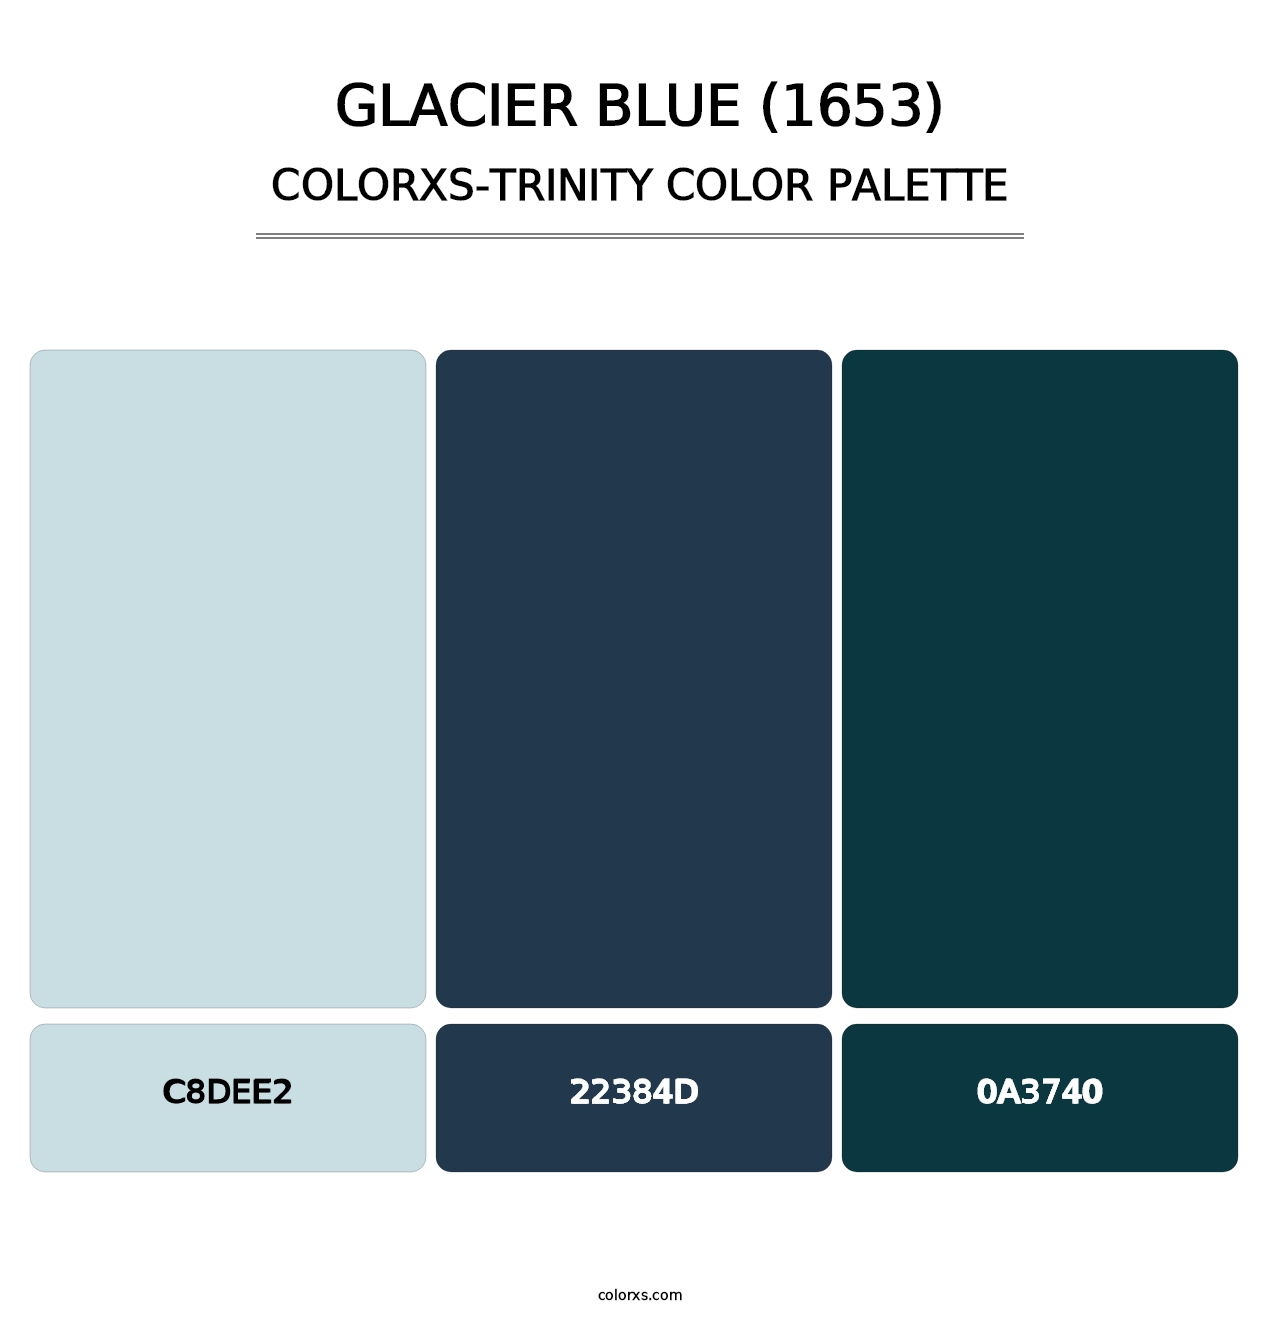 Glacier Blue (1653) - Colorxs Trinity Palette